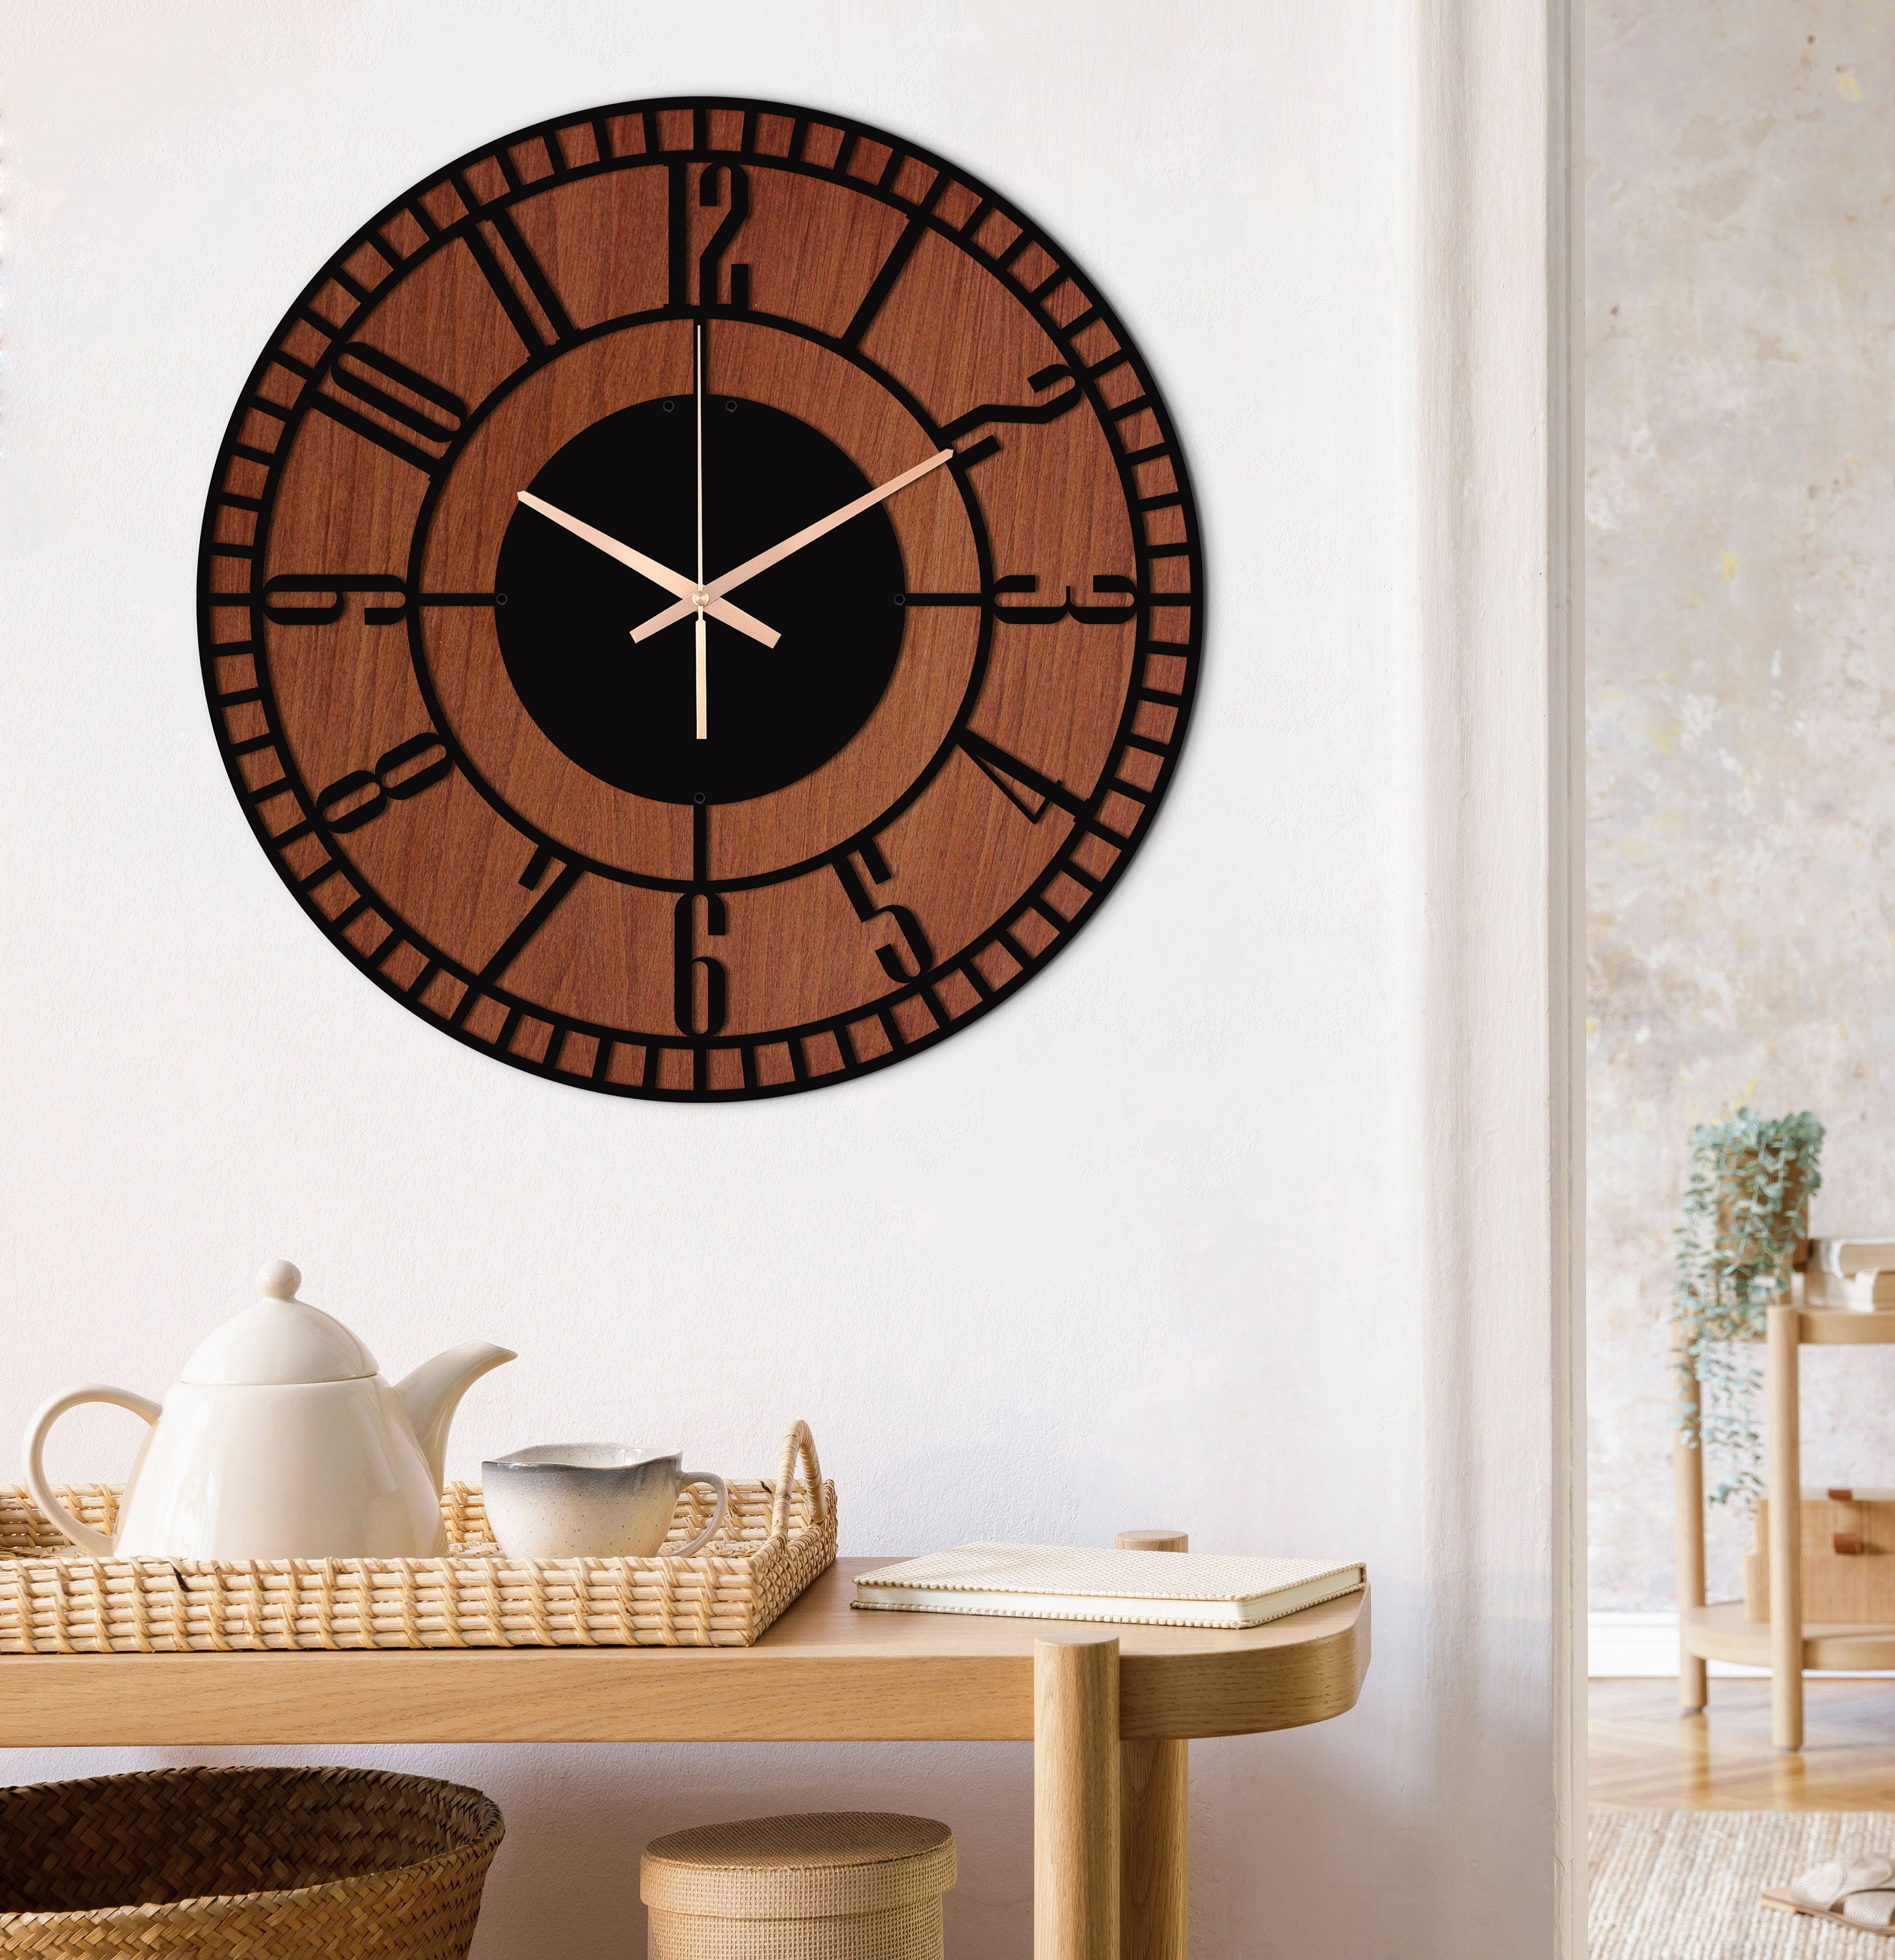 Large Unique Wall Clock, Metal Wall Clock, Wooden Wall Clock, Oversized Wall Clock, Small Wall Clock, Farmhouse Wall Clock, Clocks For Wall